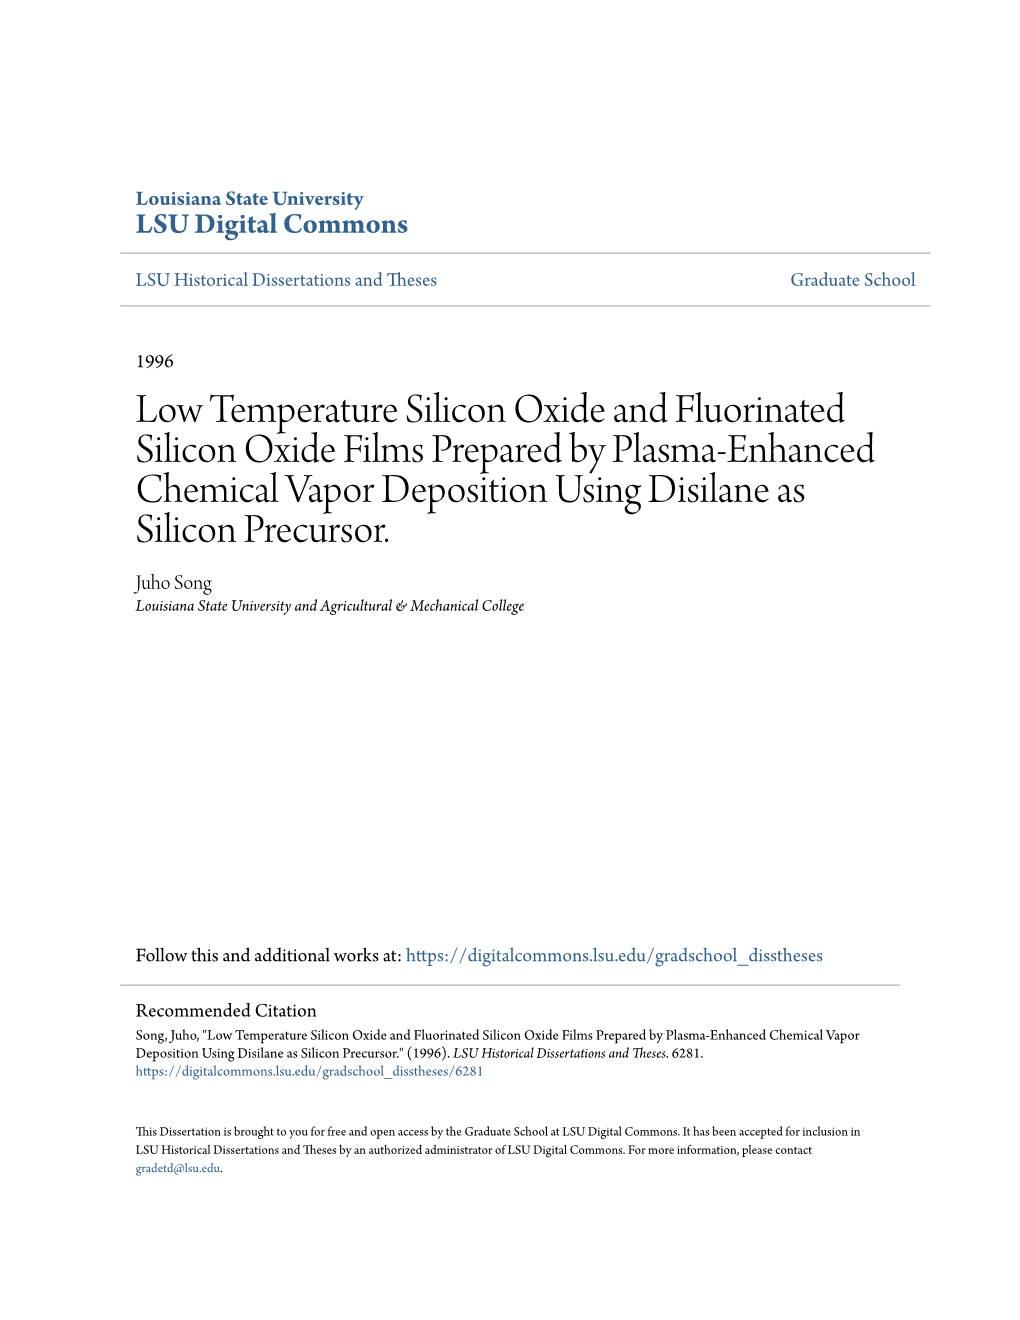 Low Temperature Silicon Oxide and Fluorinated Silicon Oxide Films Prepared by Plasma-Enhanced Chemical Vapor Deposition Using Disilane As Silicon Precursor